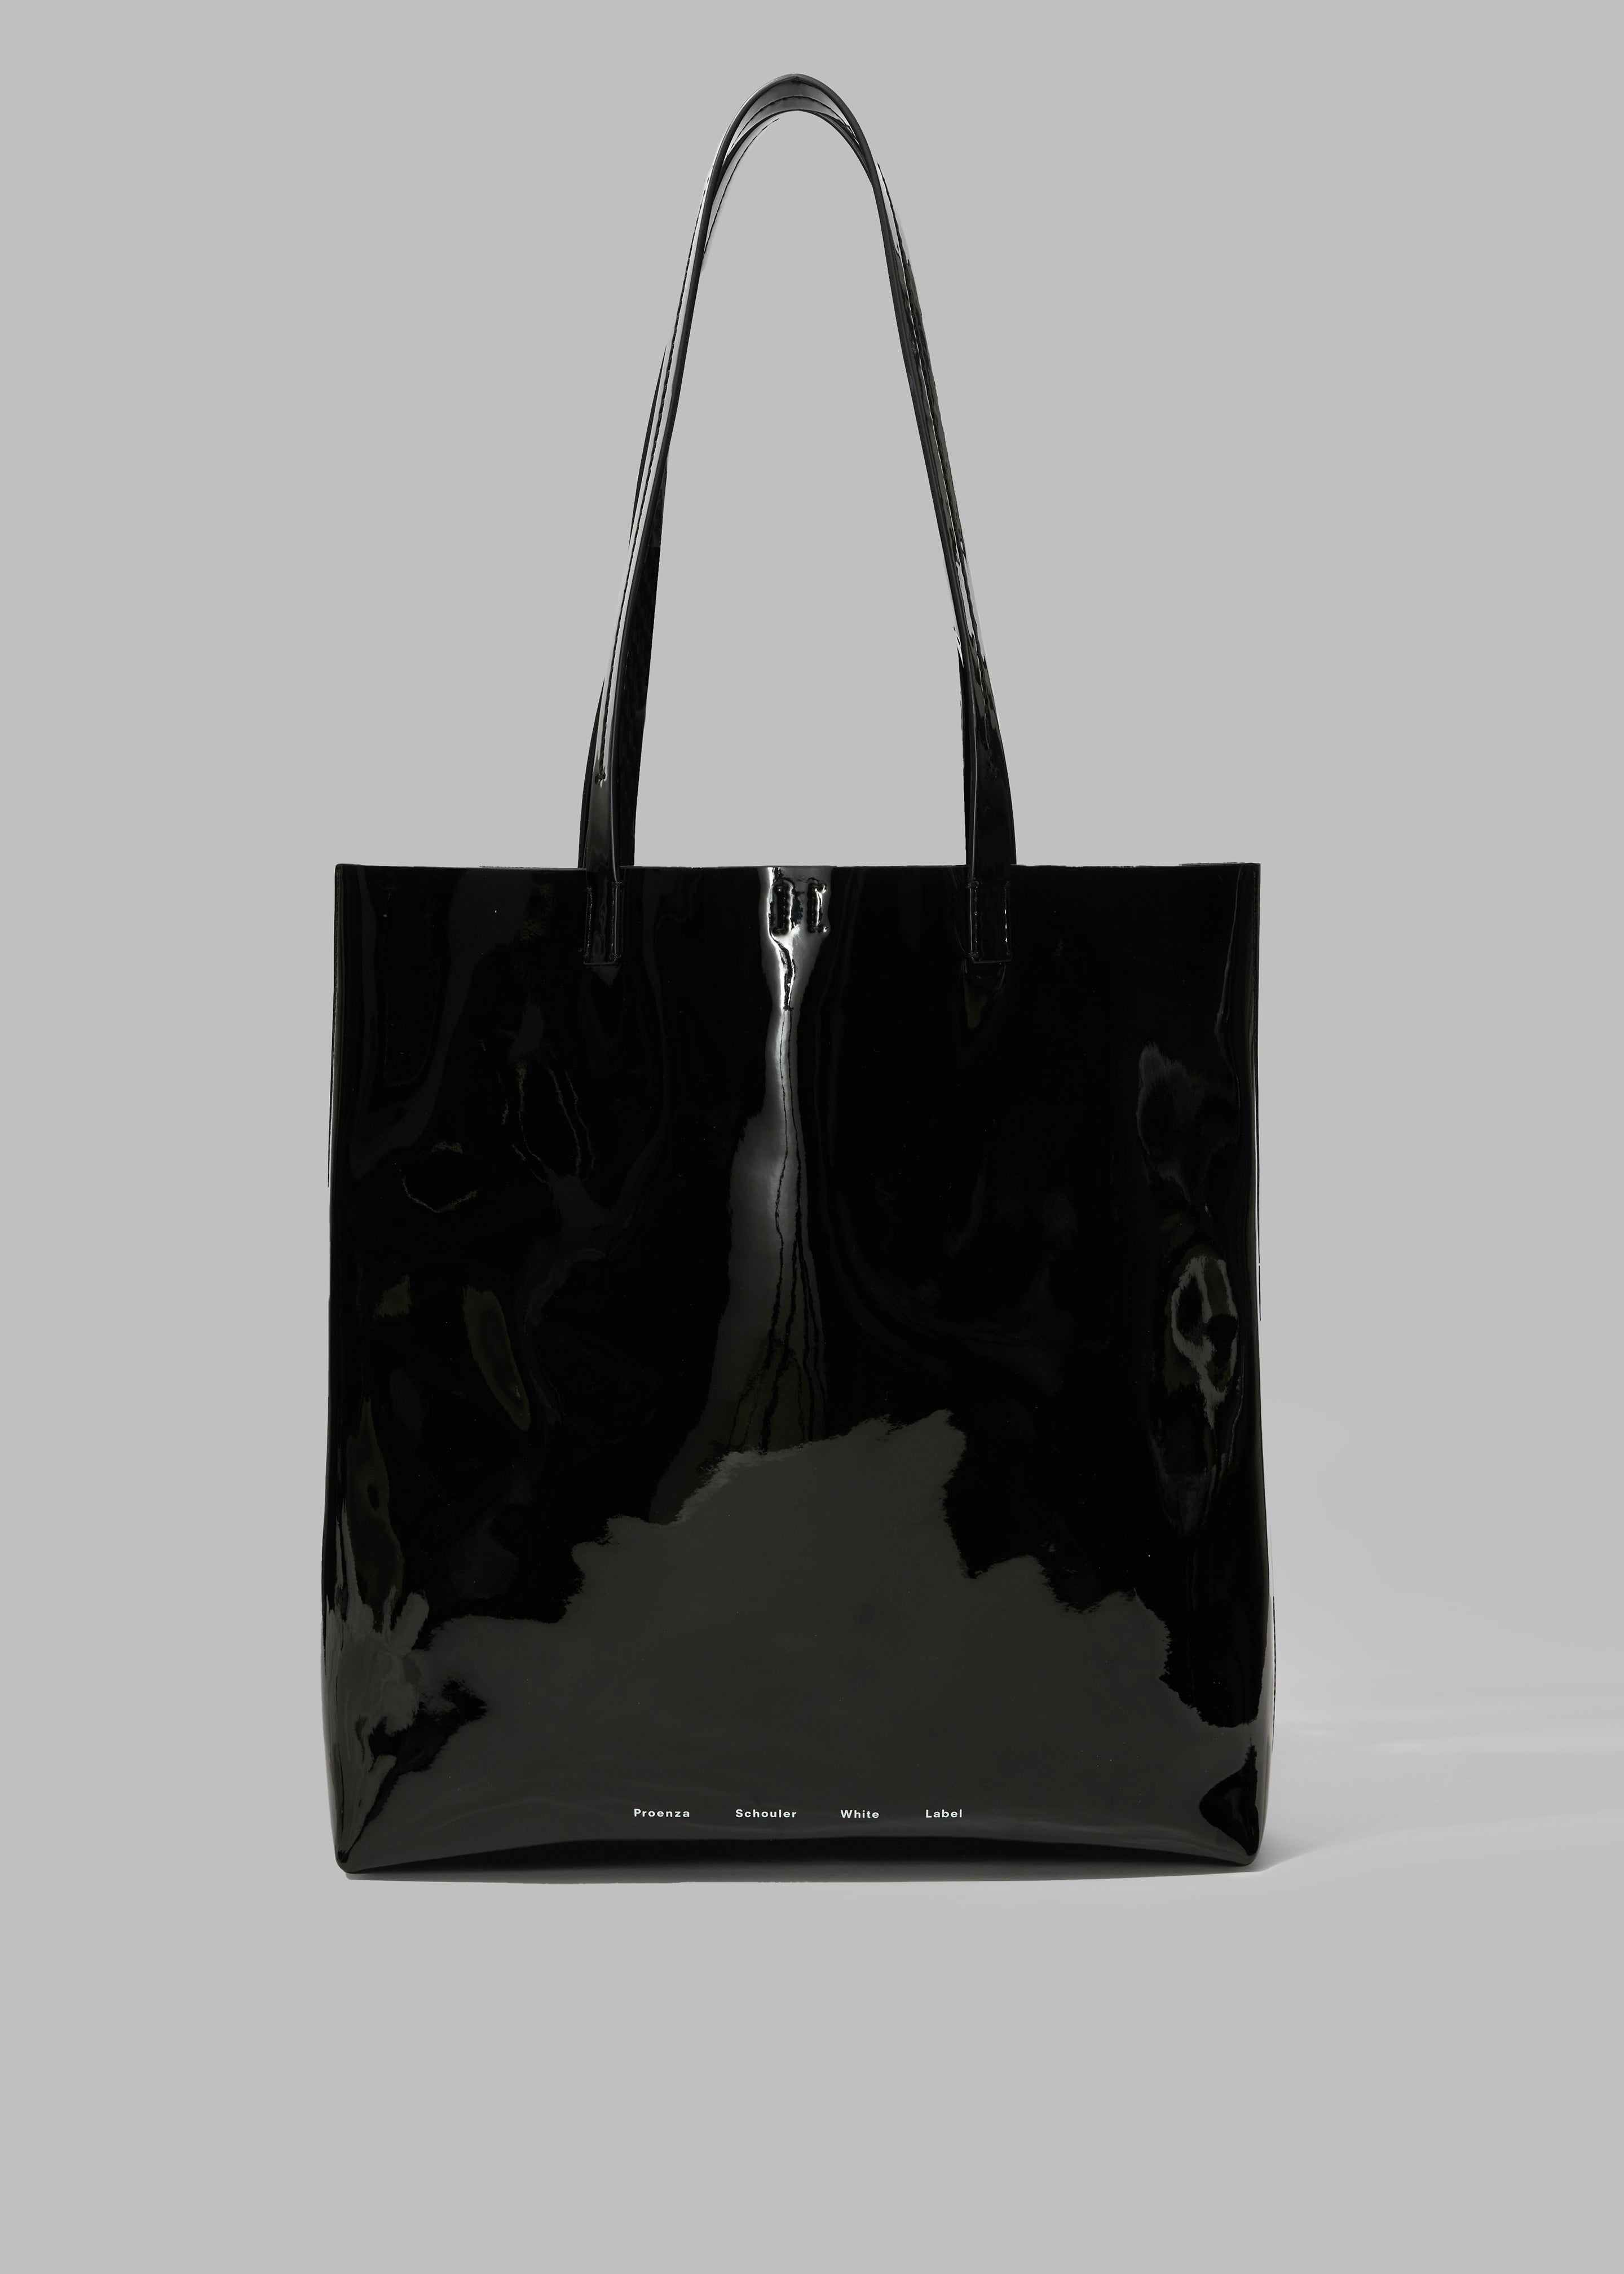 Proenza Schouler White Label Walker Patent Tote Bag - Black - 9